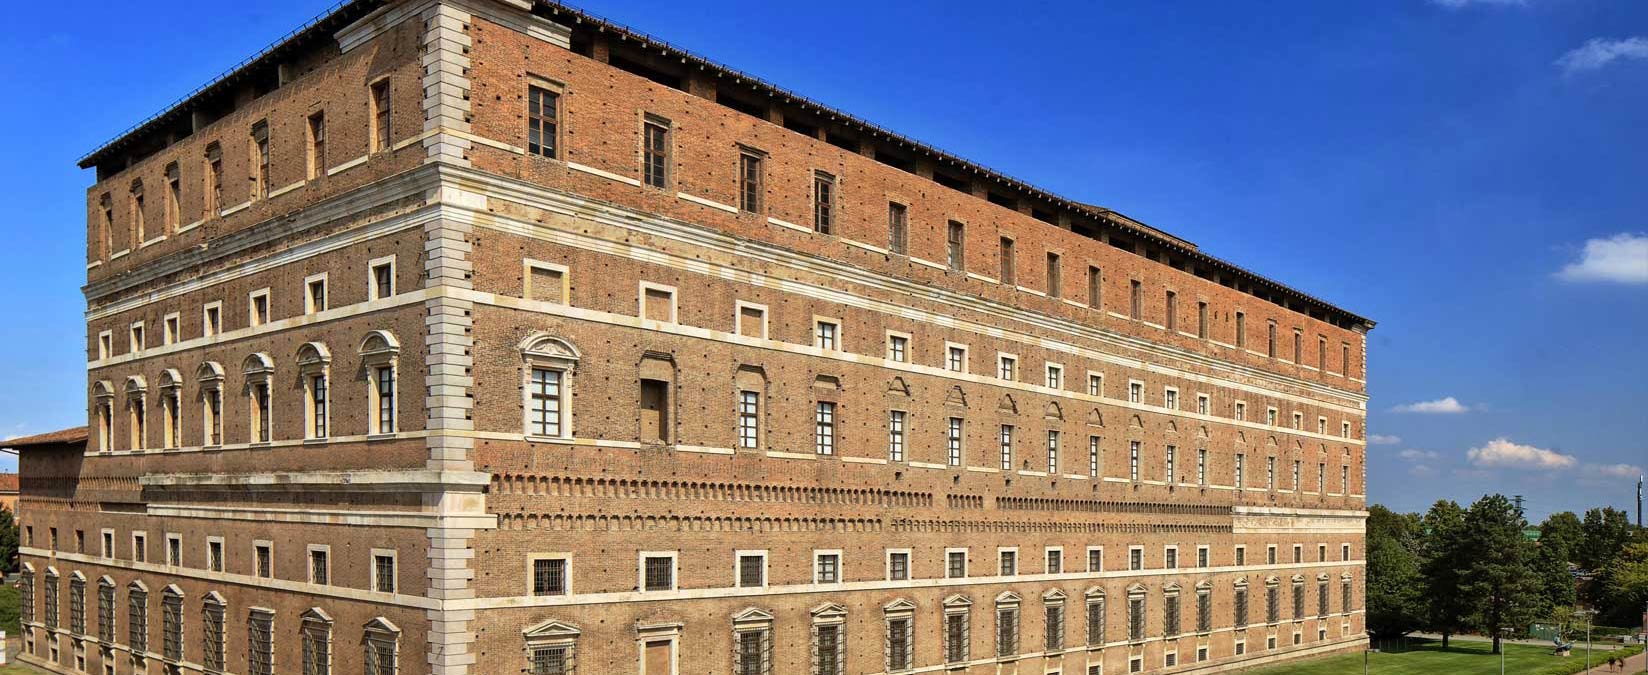 Palazzo Farnese